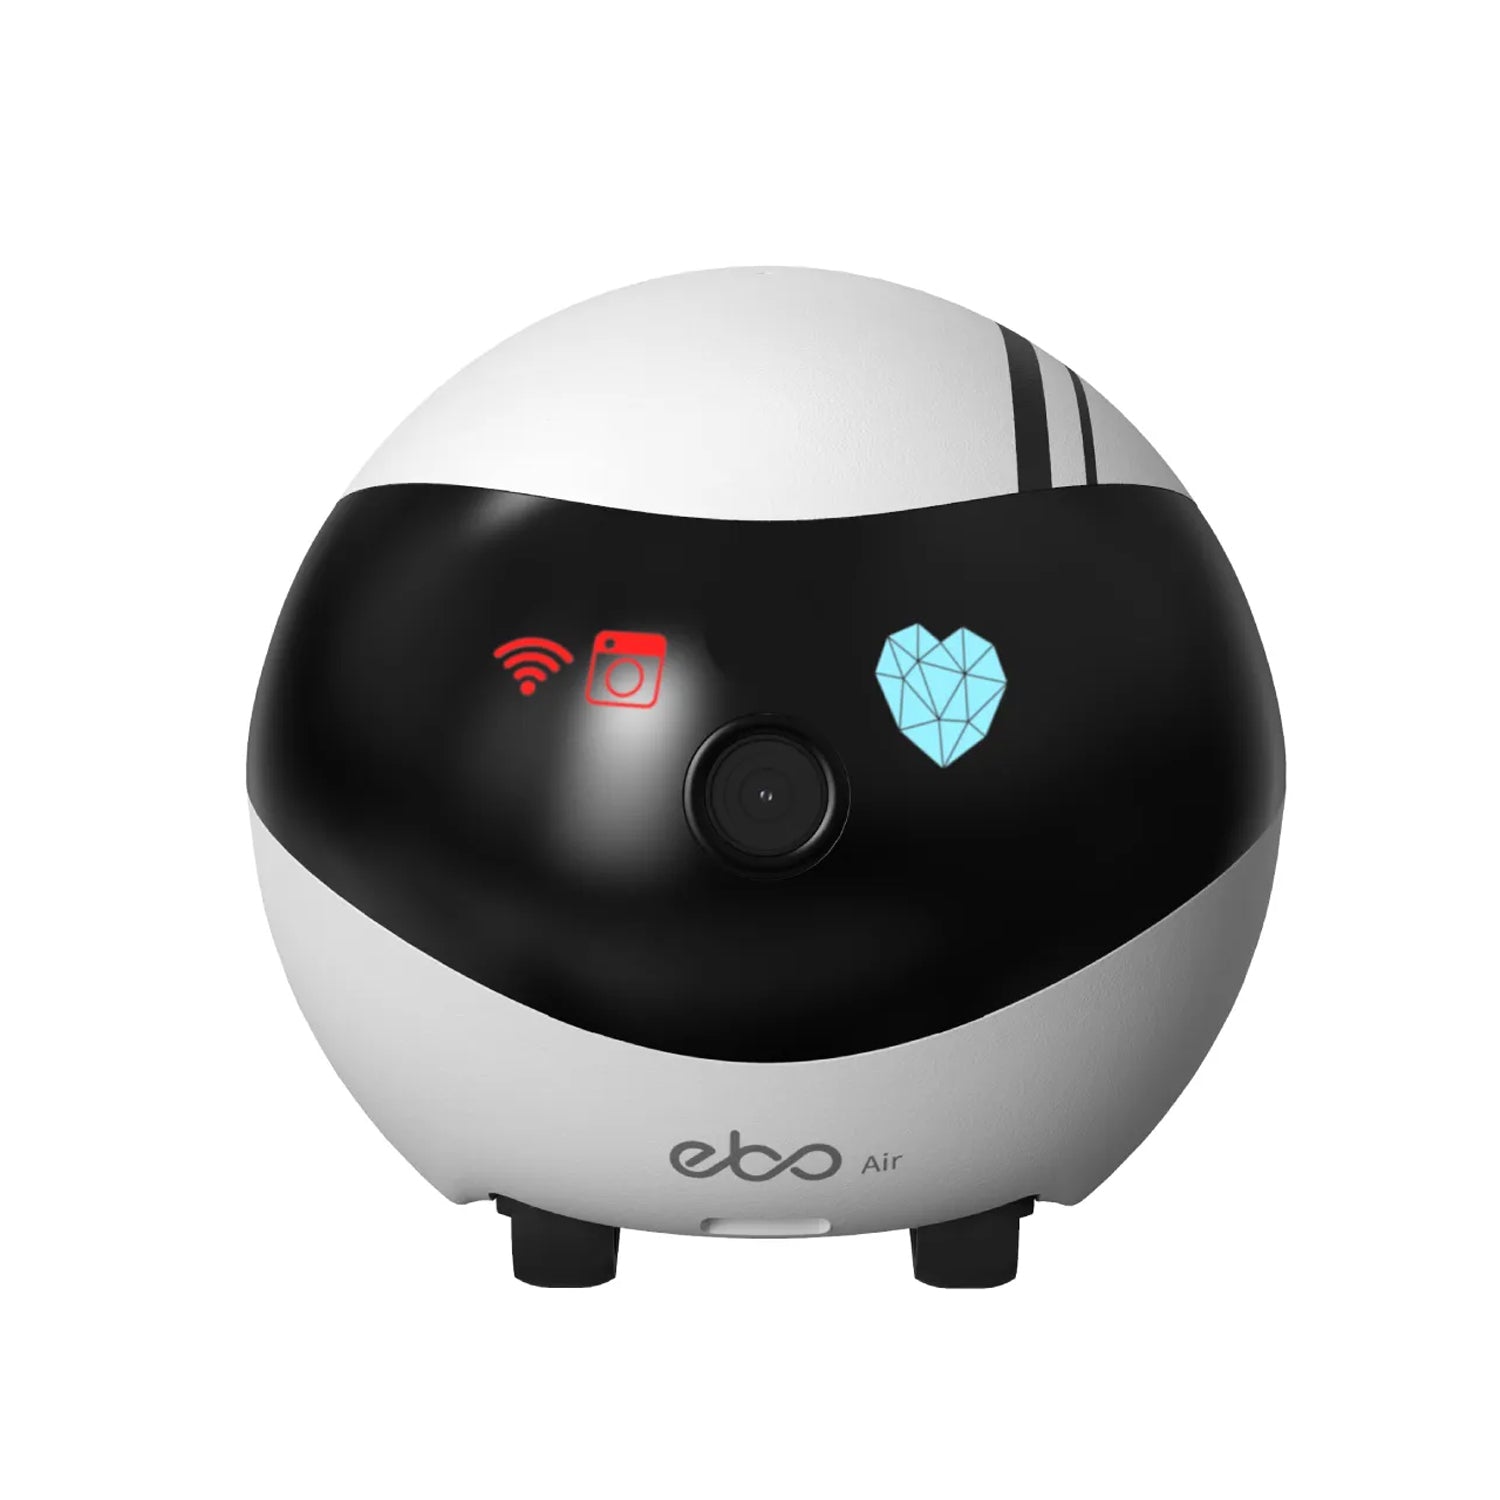 Enabot Ebo Air Smart Family Bot